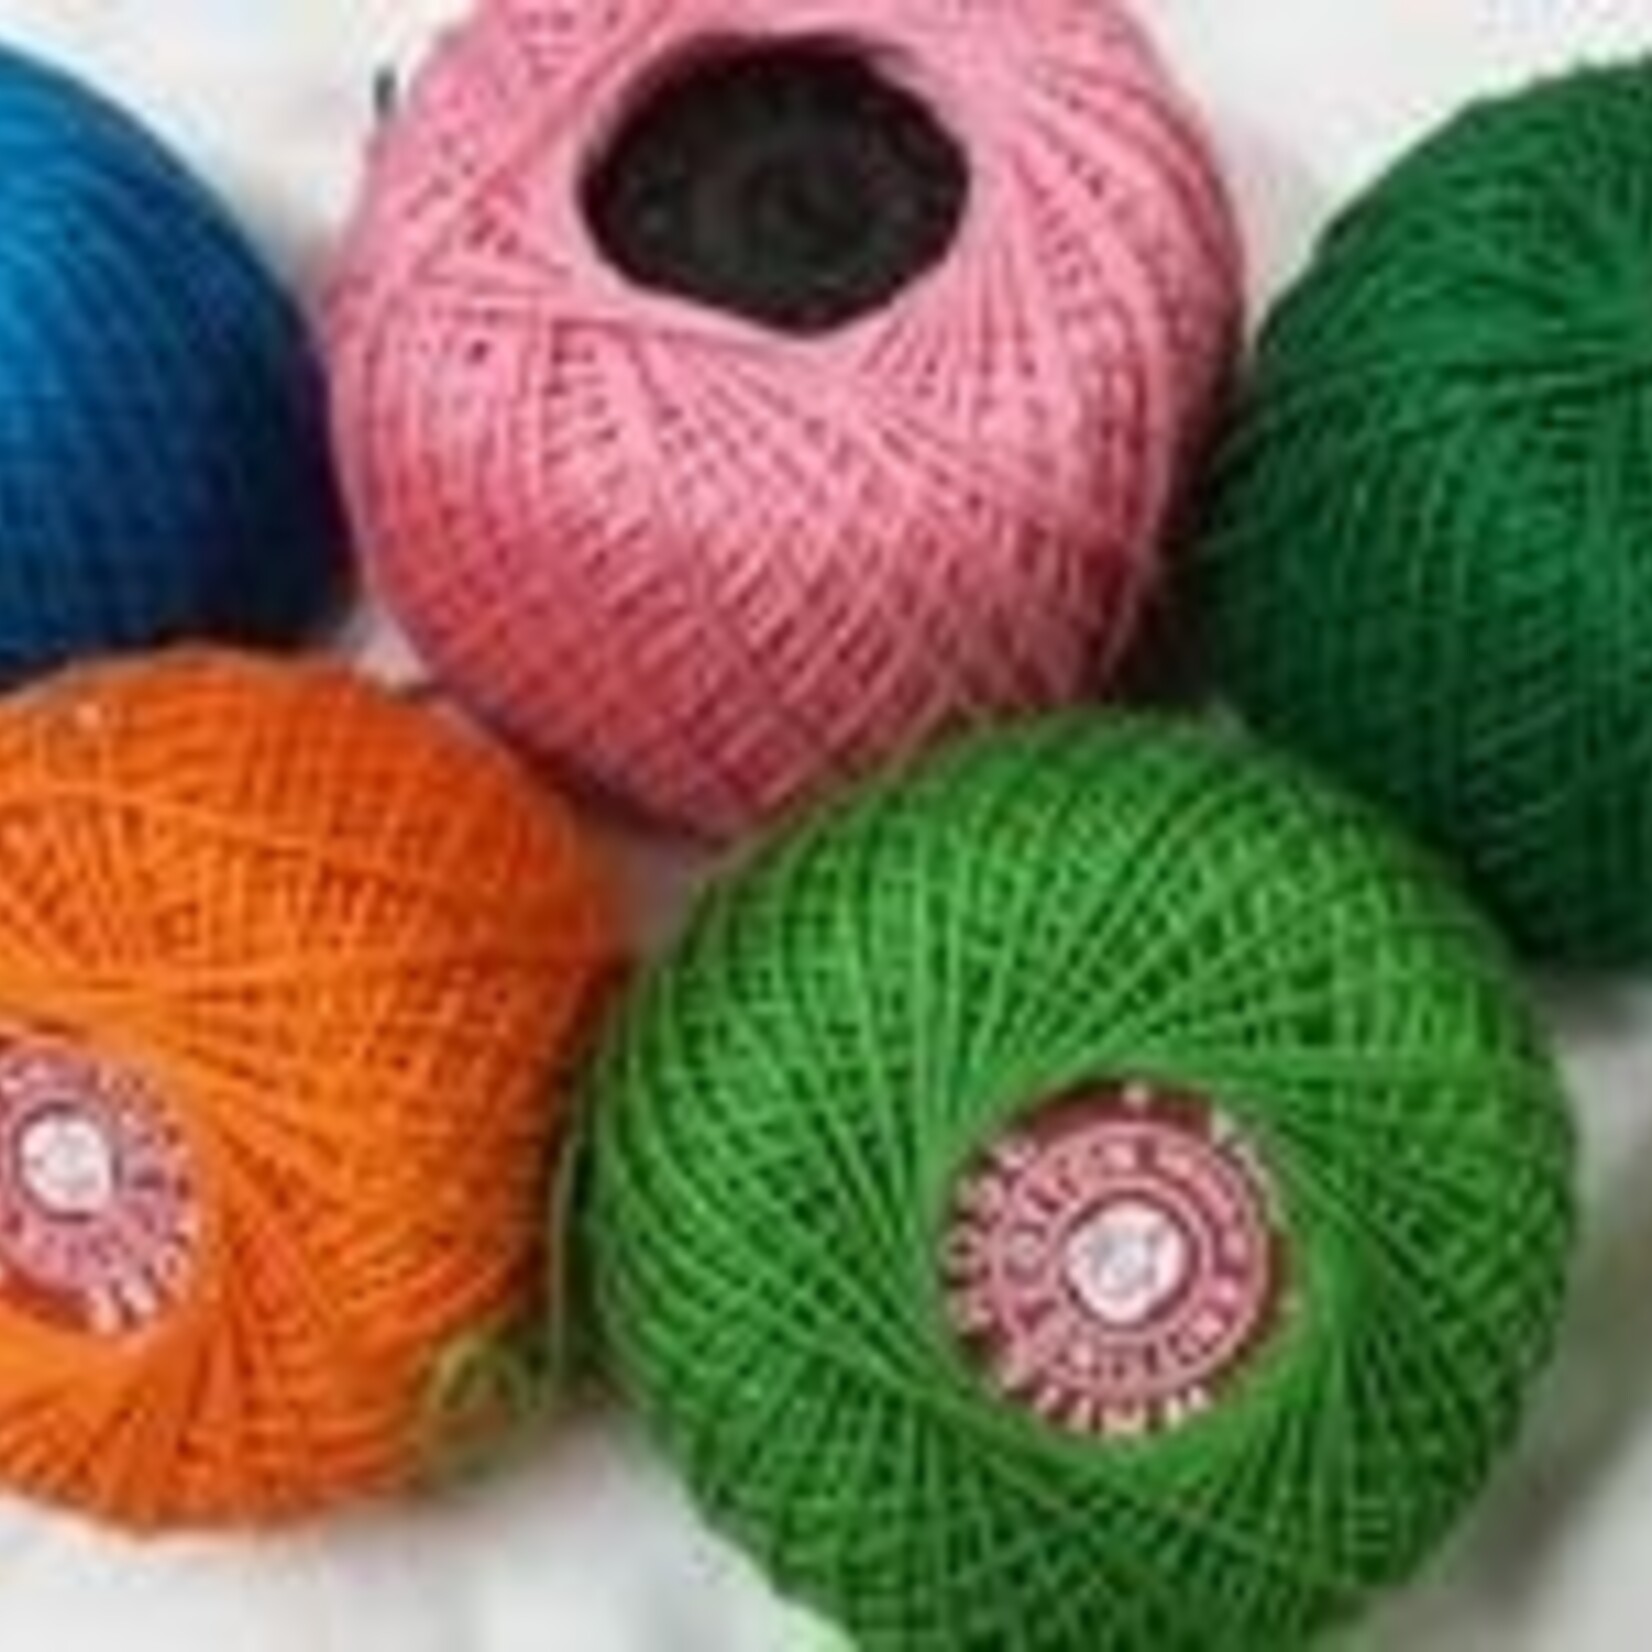 White Rose Metallic Crochet Yarn, For Weaving, 20 at Rs 25/roll in